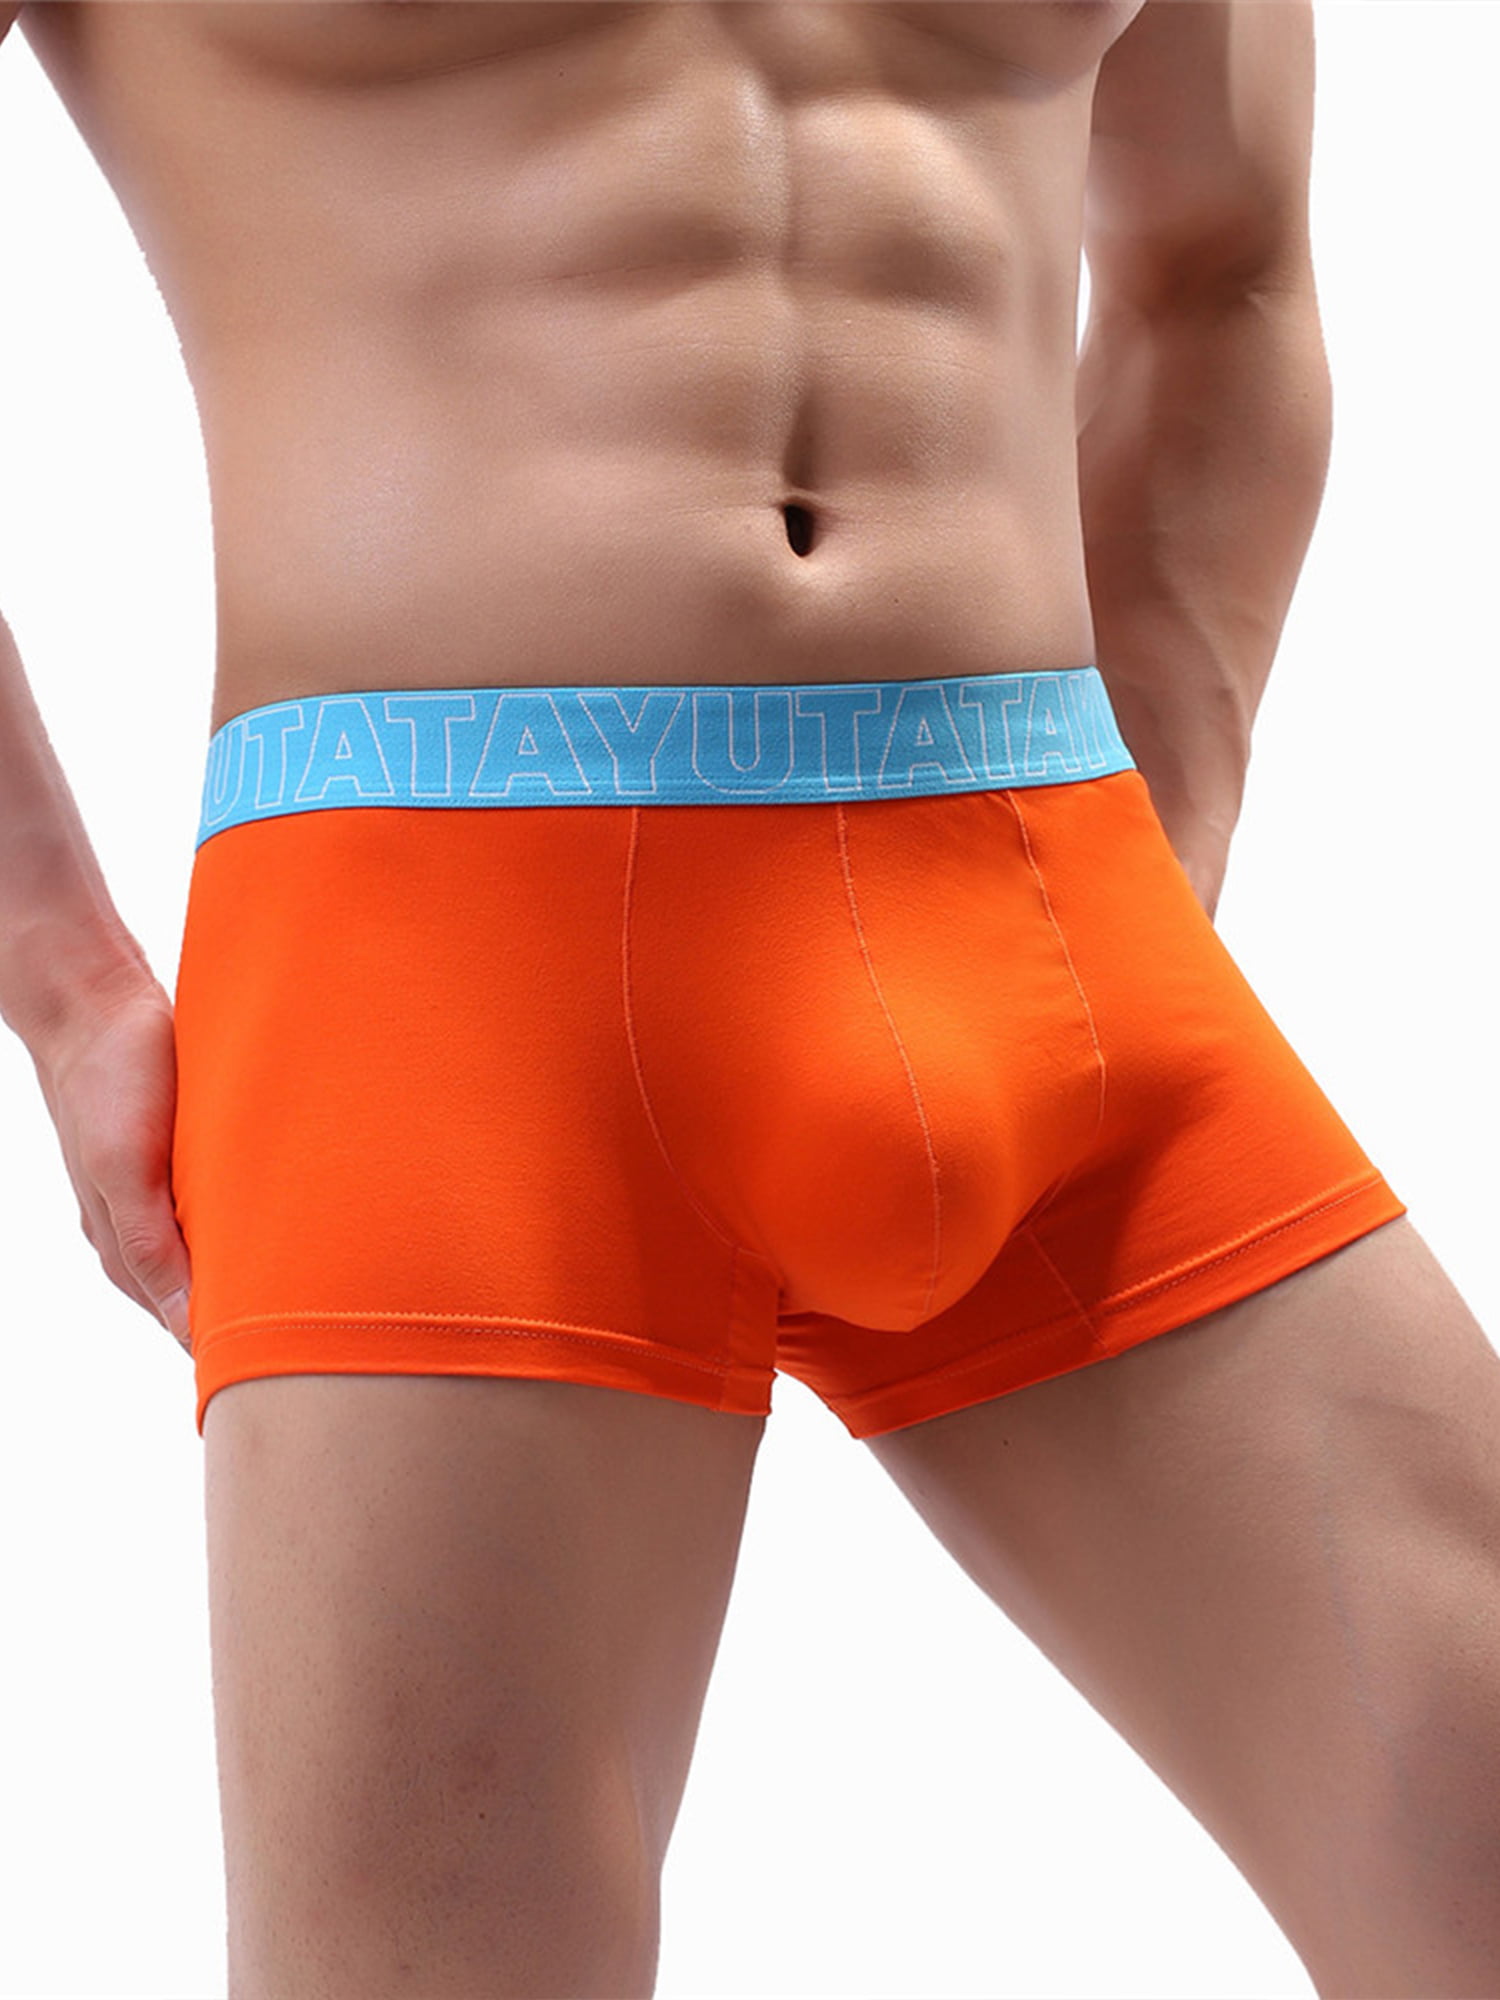 LEERYAAY Cargo&Chinos Men Underwear Pouch Shorts Underpants Breathable Soft Briefs Panties Triple Pant 